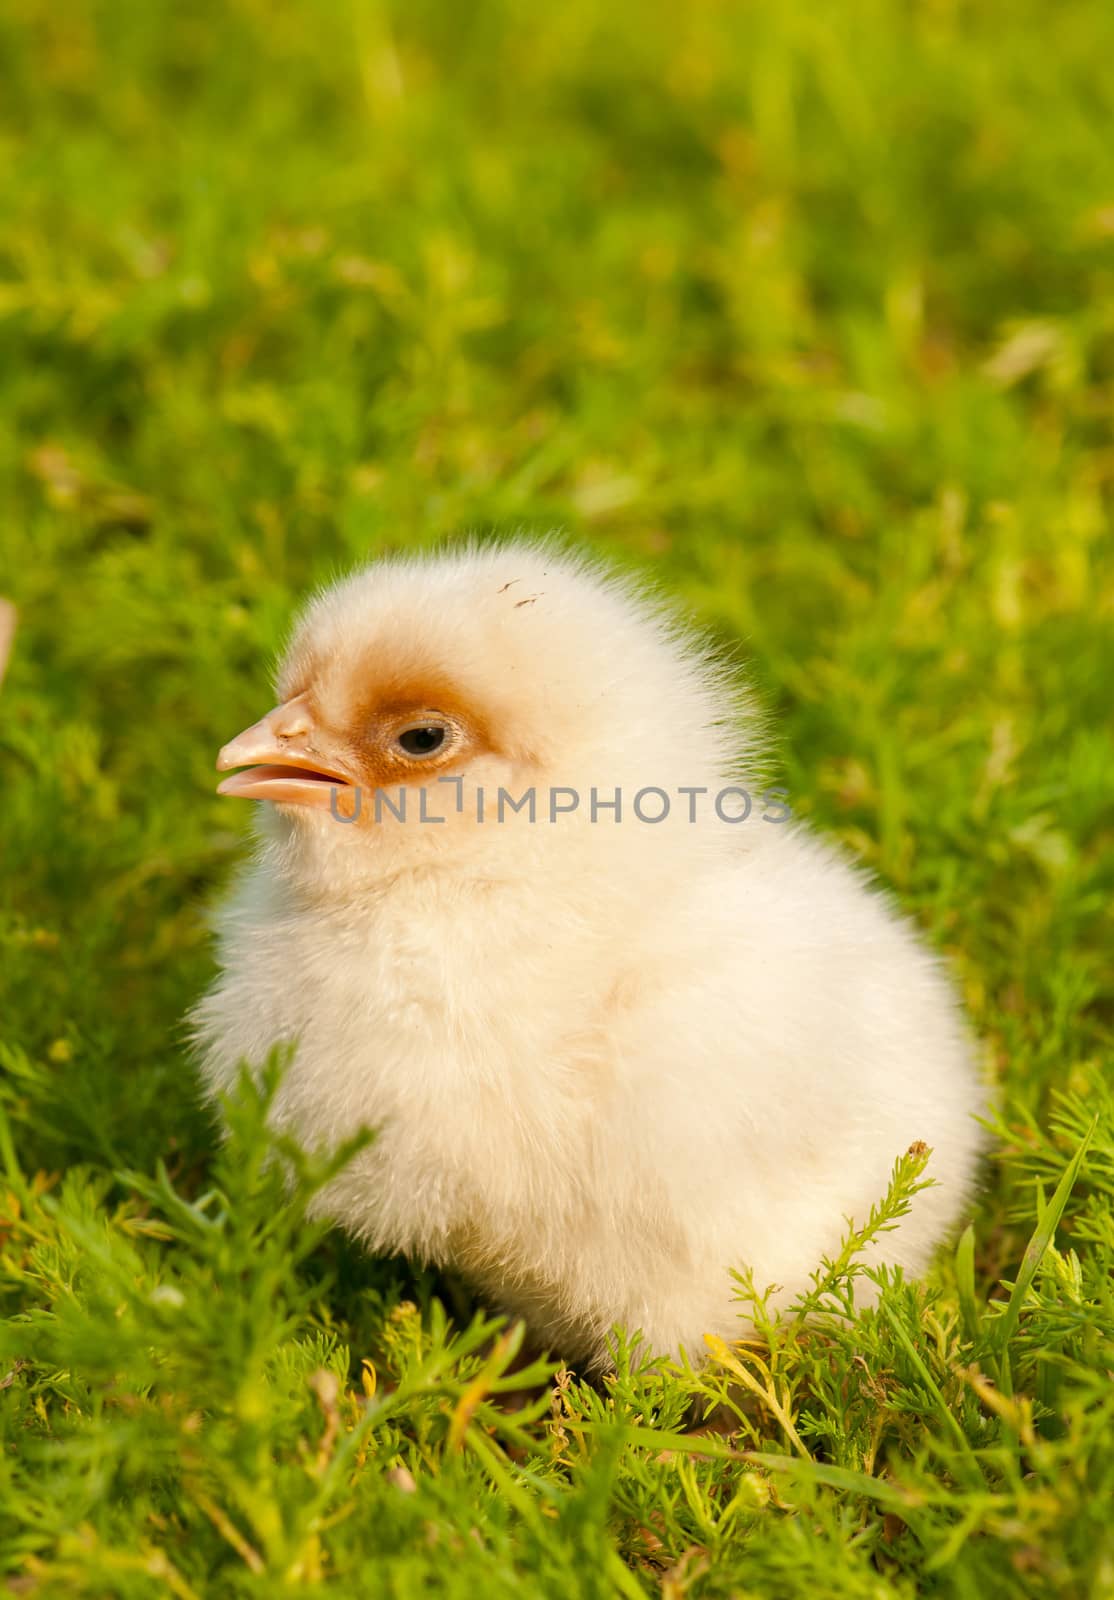 Chick by Gucio_55